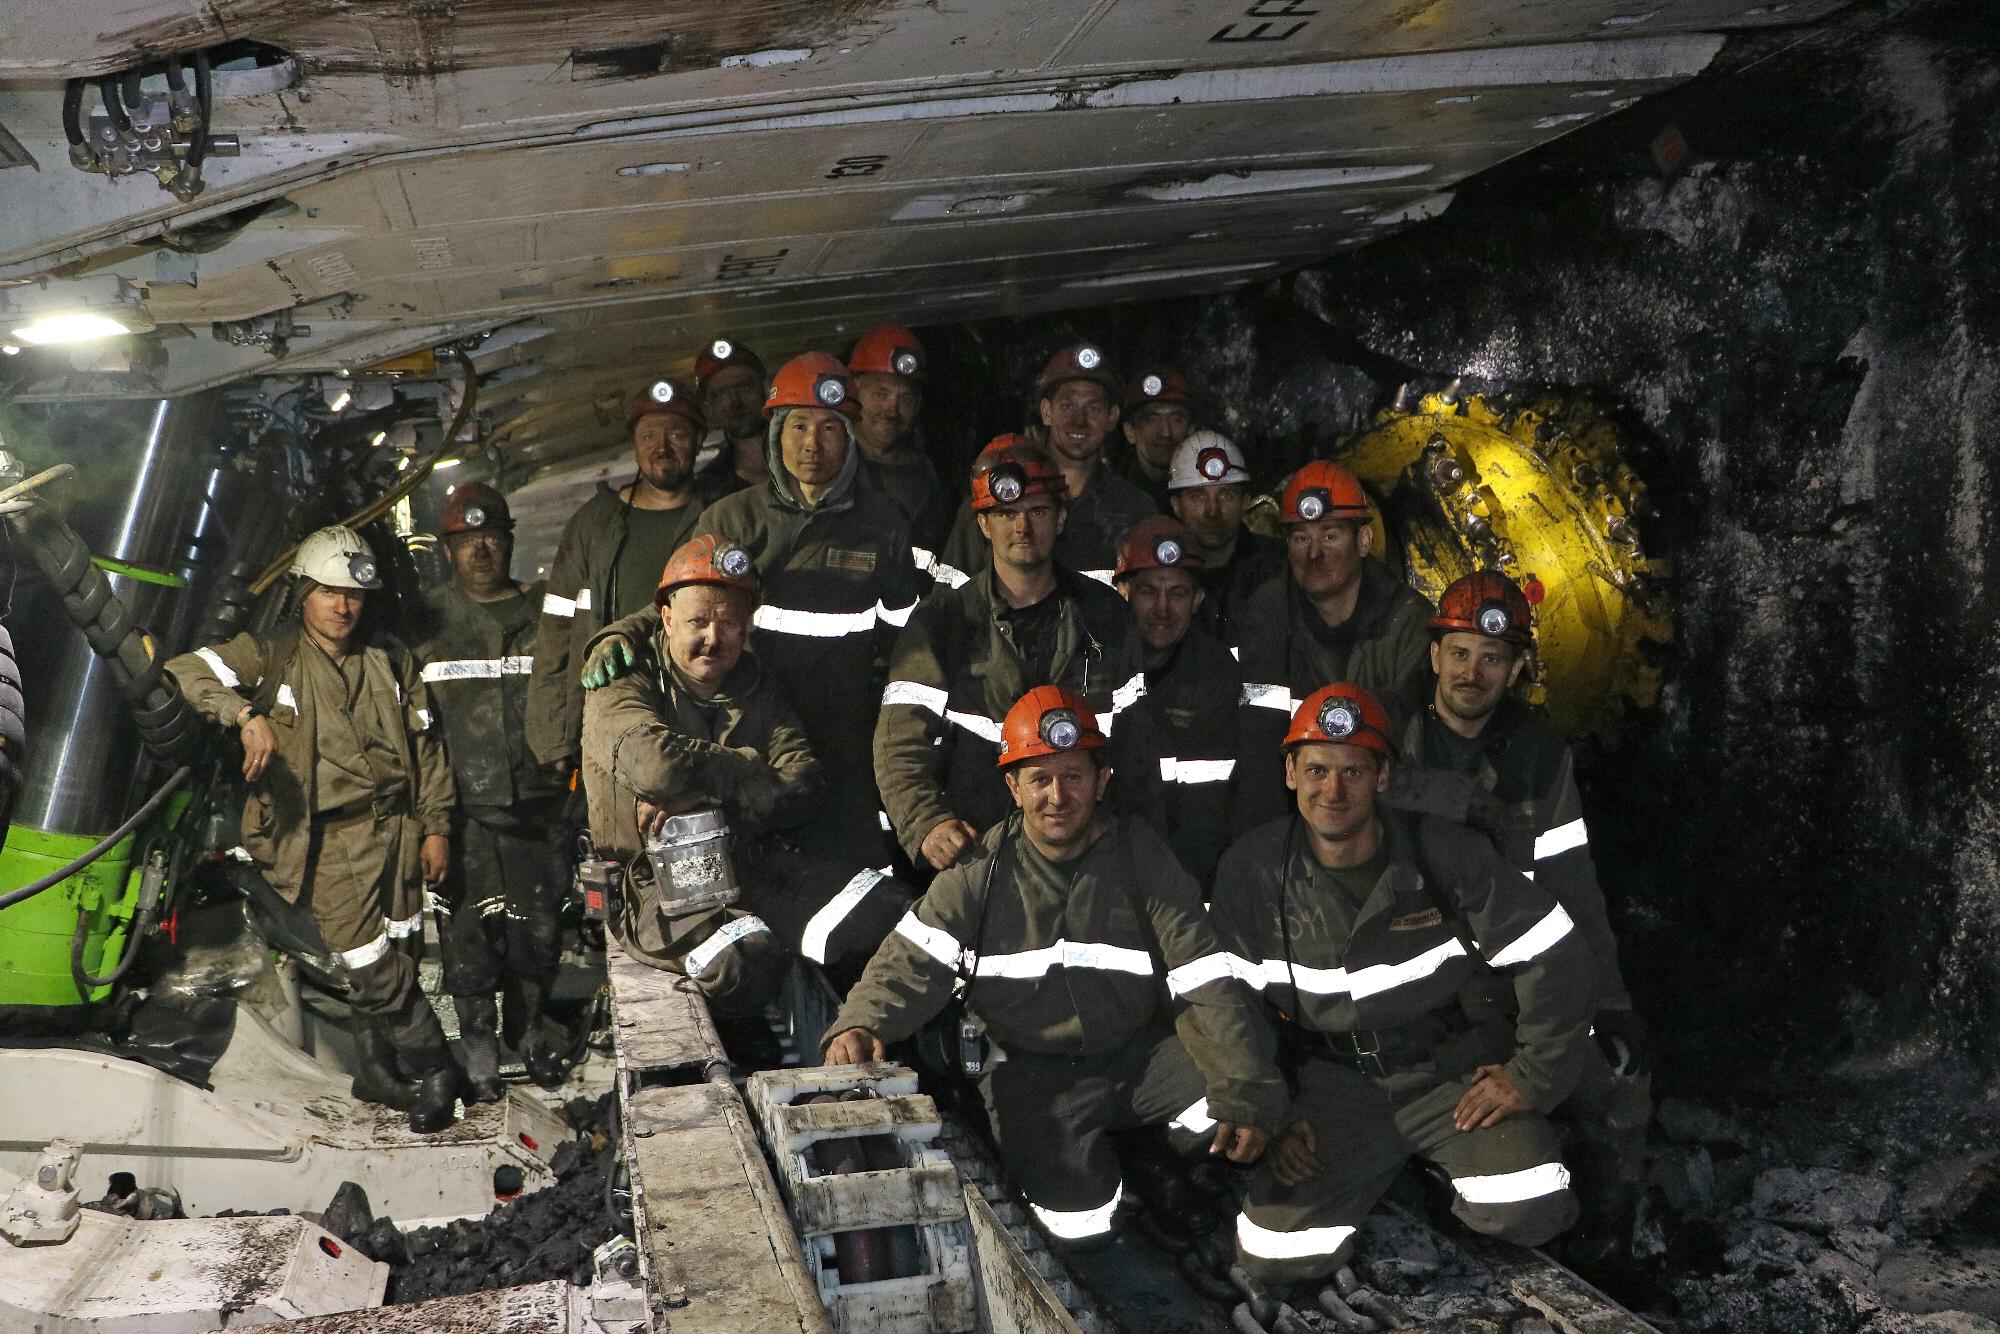 Подготовку к организации празднования Дня шахтера обсудили в Якутии